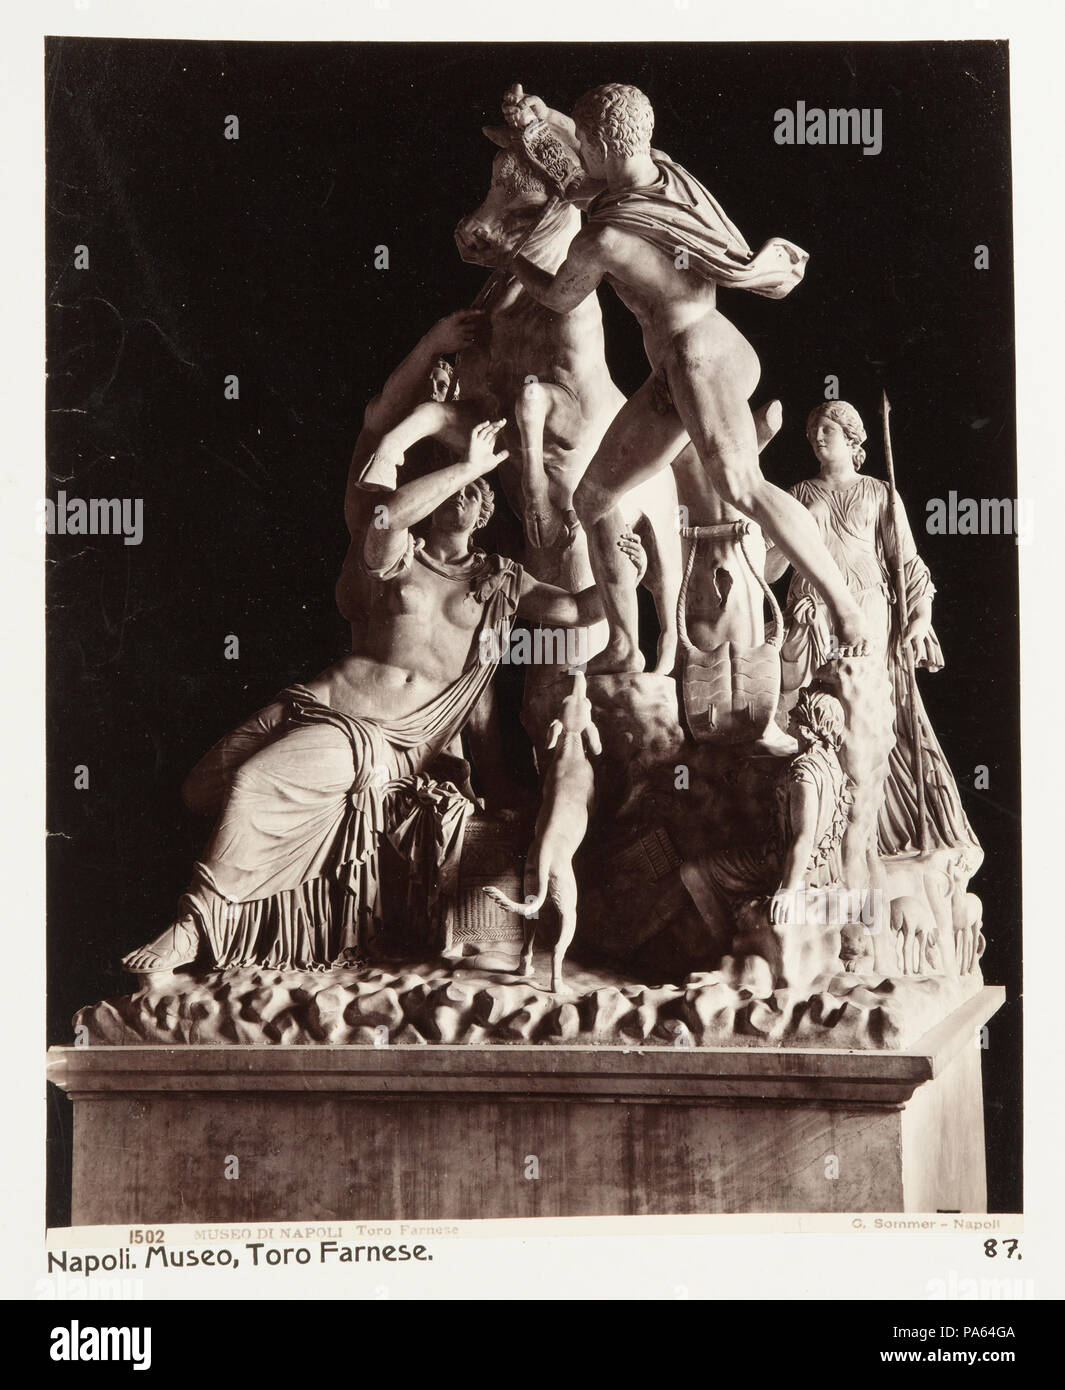 87 Fotografi av Museo, Toro Farnese. Neapel, Italien - Hallwylska museet - 106846 Stock Photo